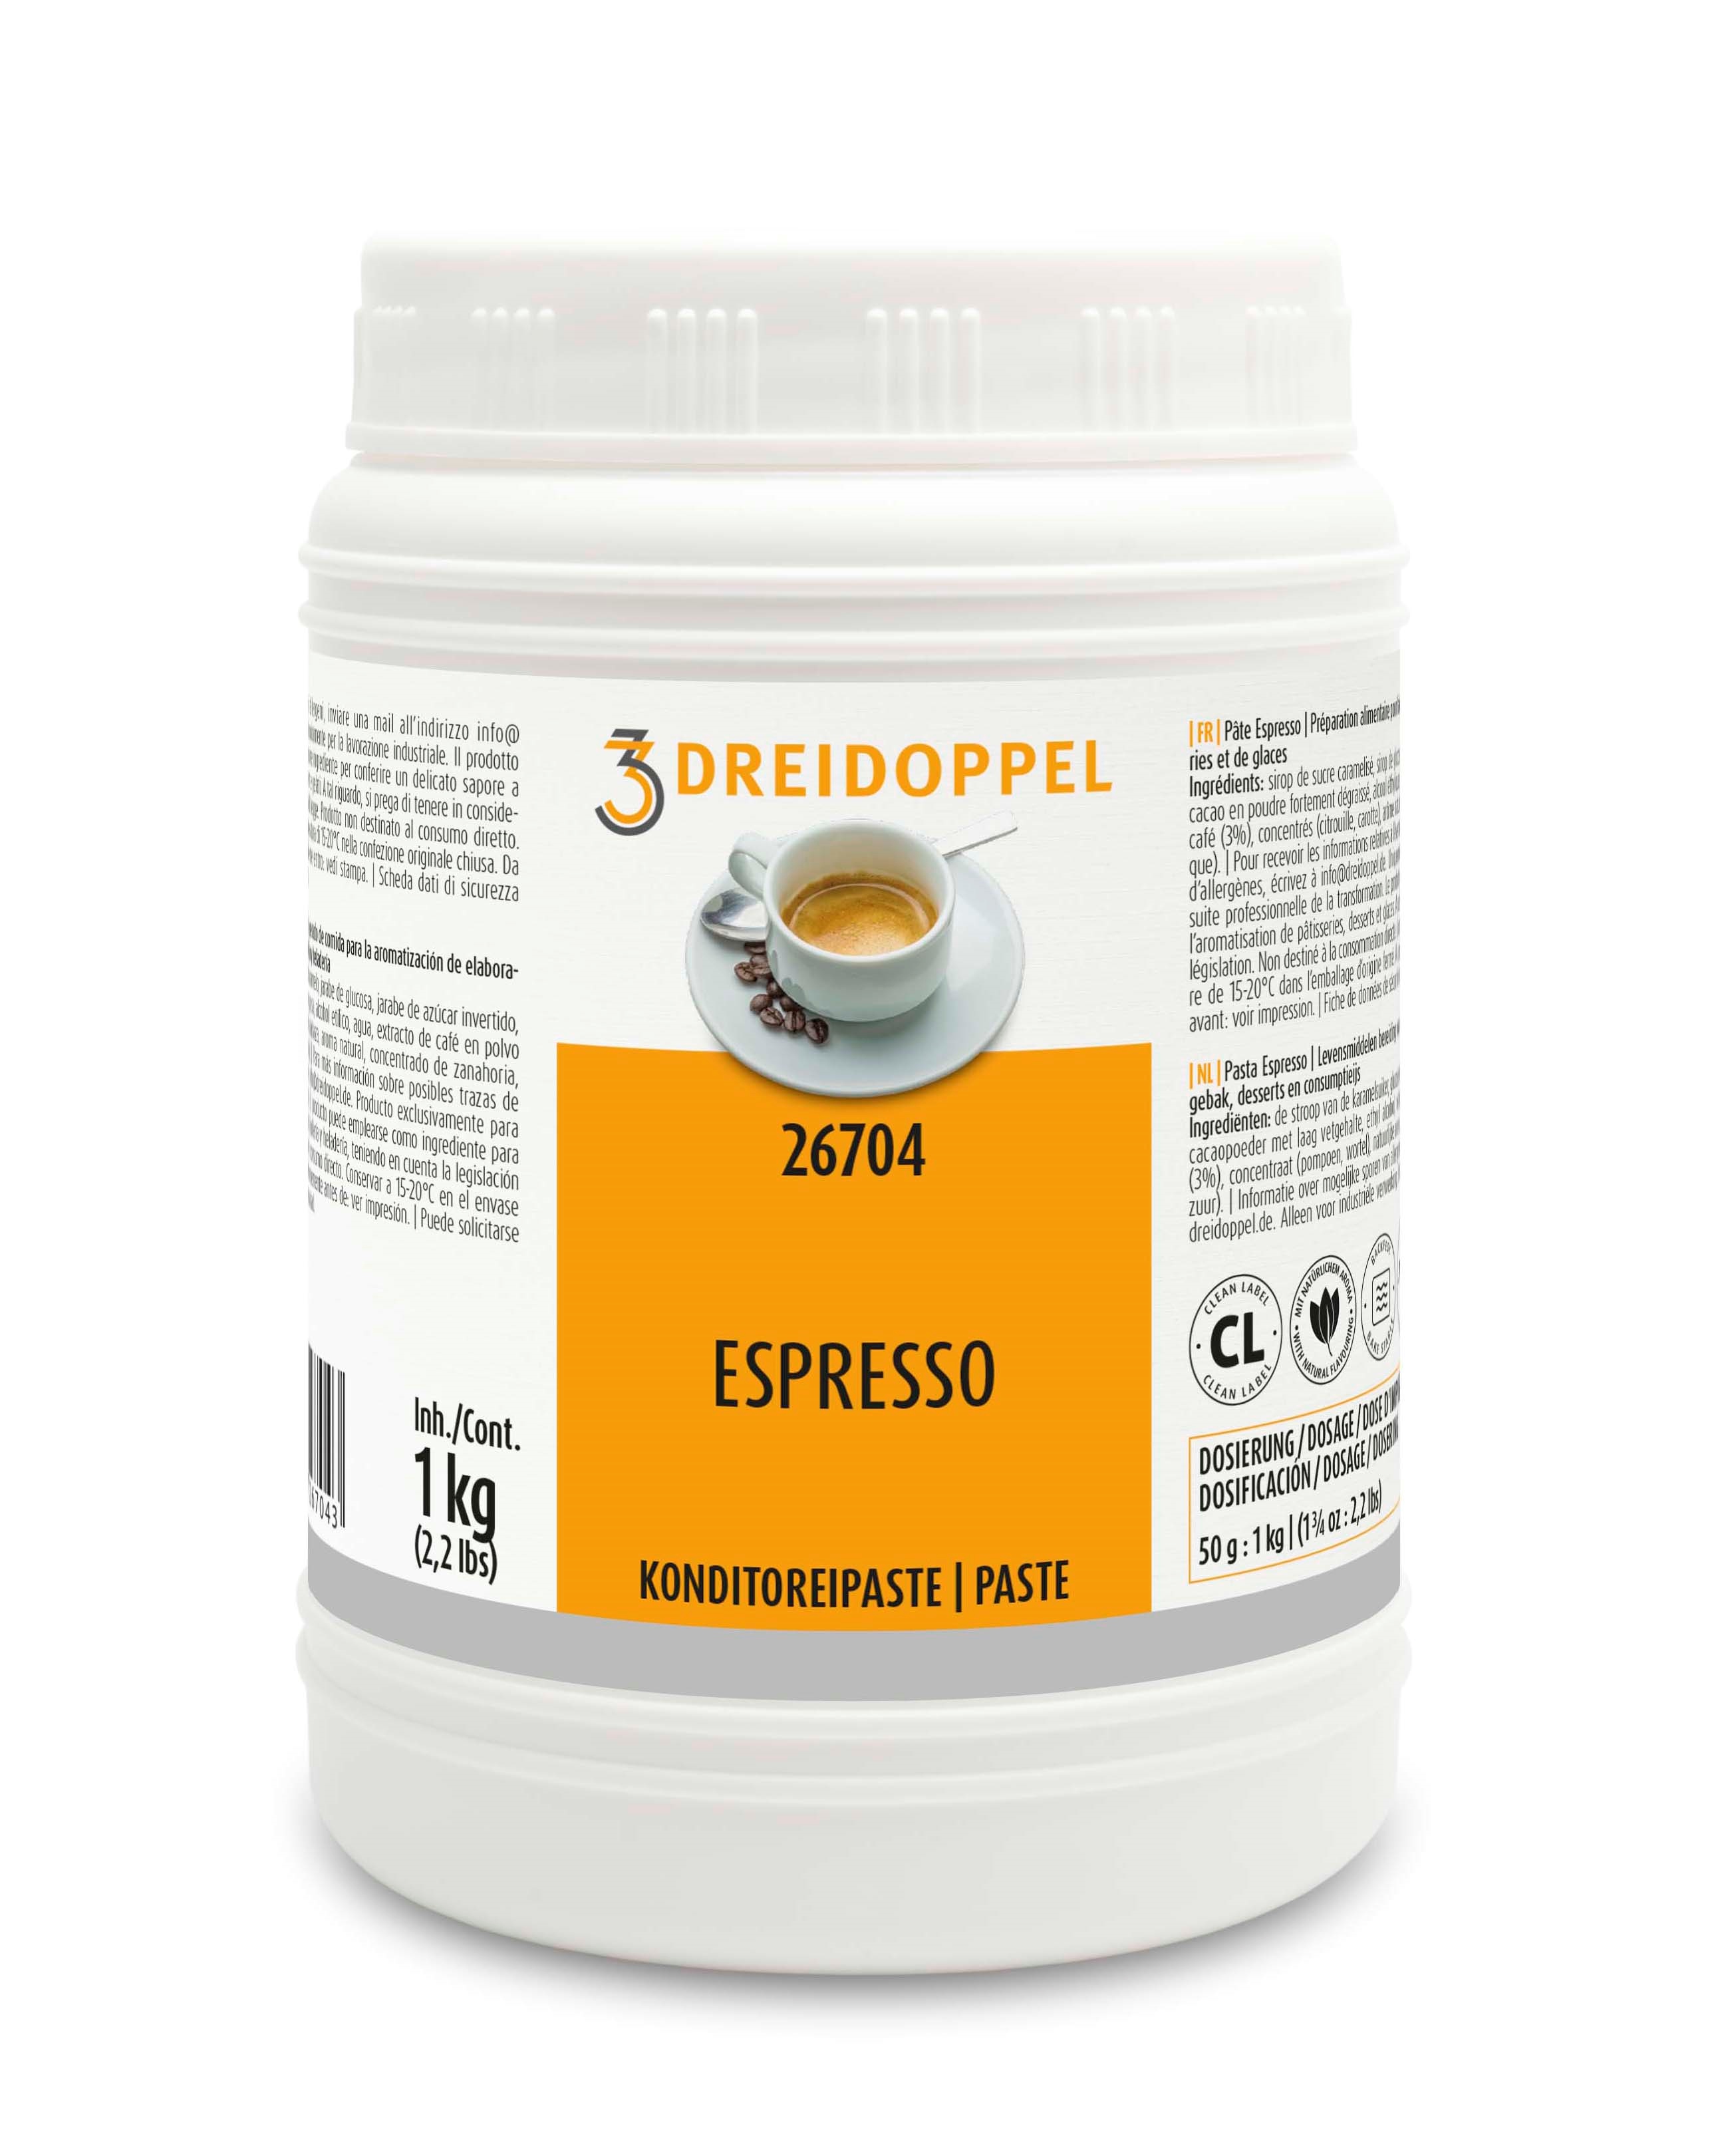 Dreidoppel Konditoreipaste Espresso 1kg